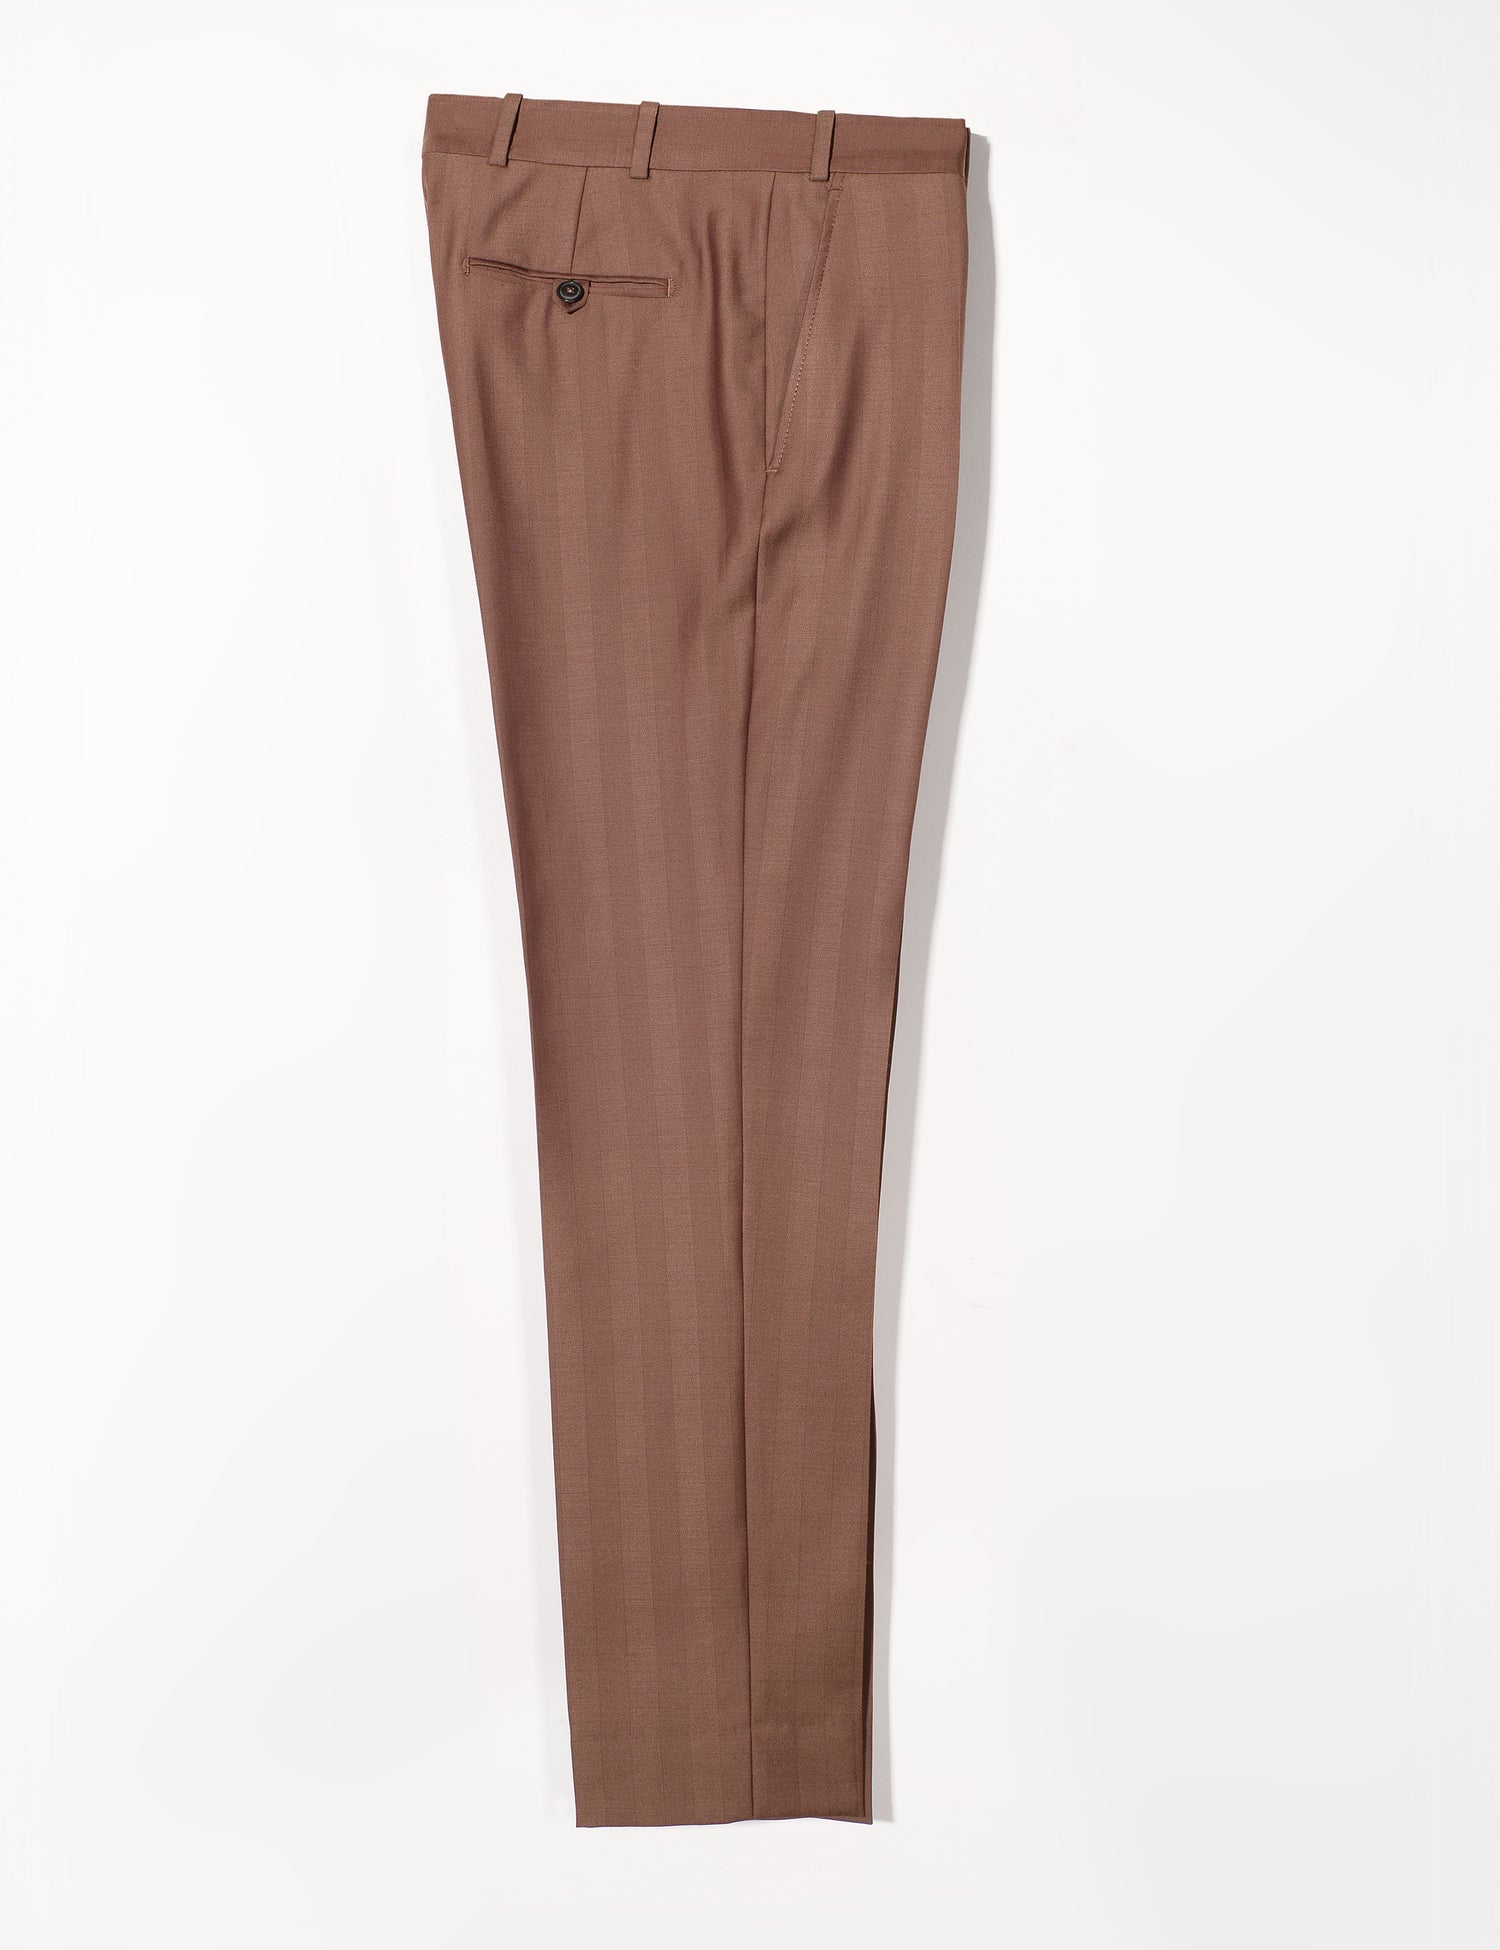 Brooklyn Tailors BKT50 Tailored Trousers in Wool Herringbone - Sepia full length flat shot